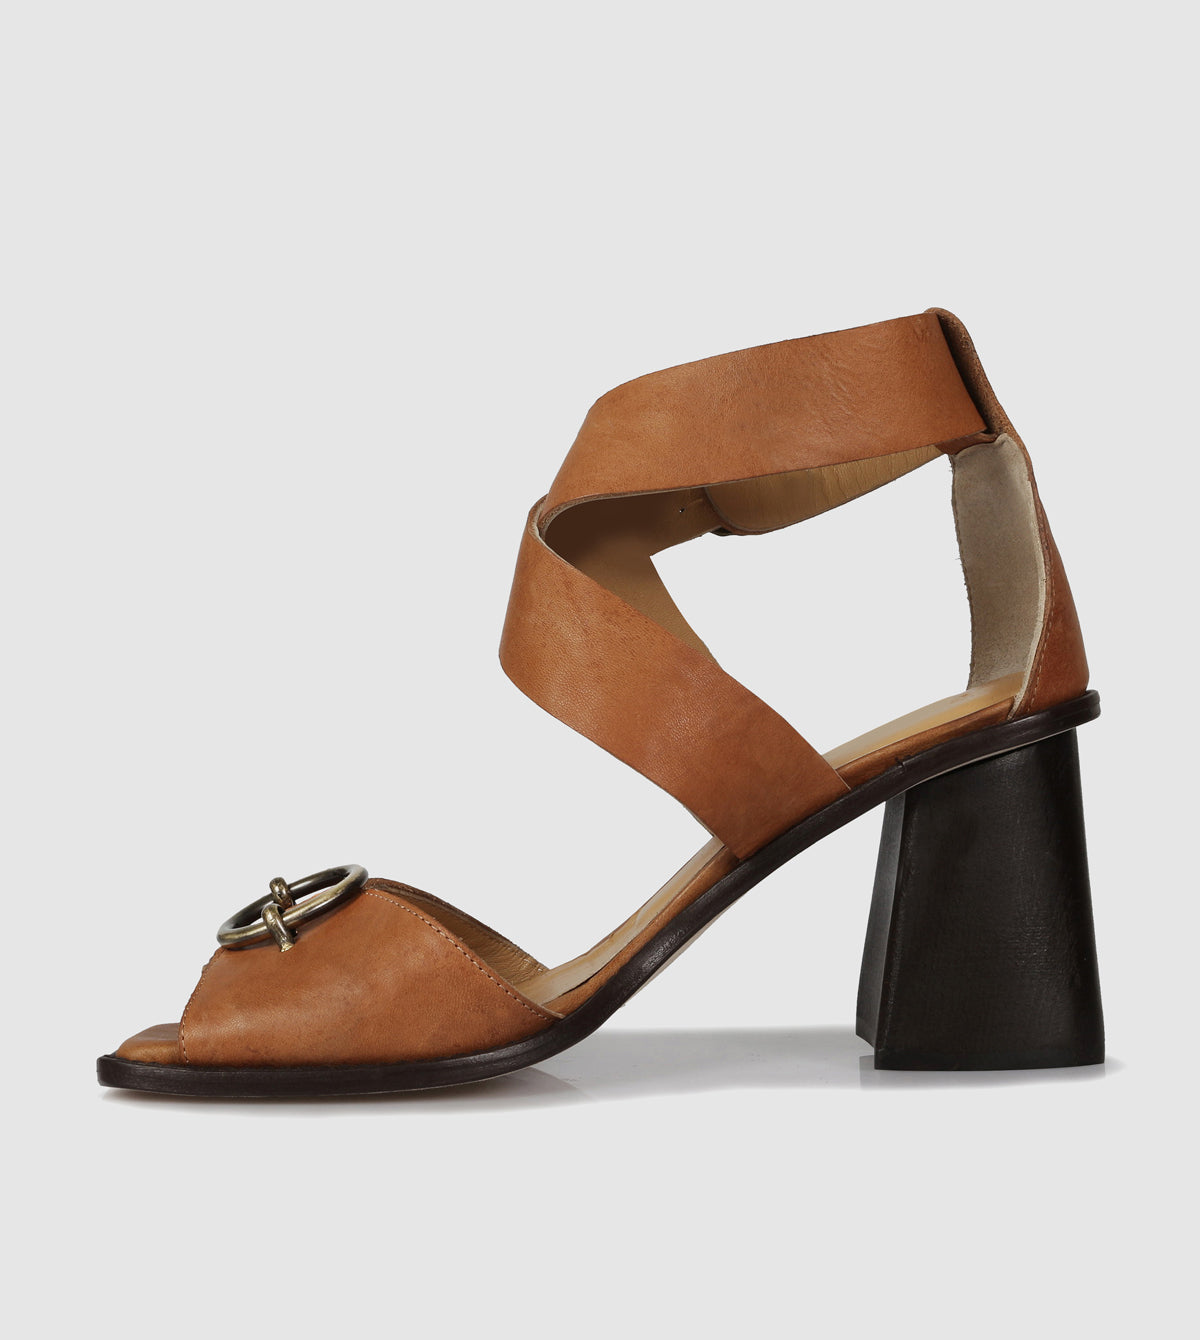 Chloe British Green Suede Leather C Logo Platform Sandal Heels 36